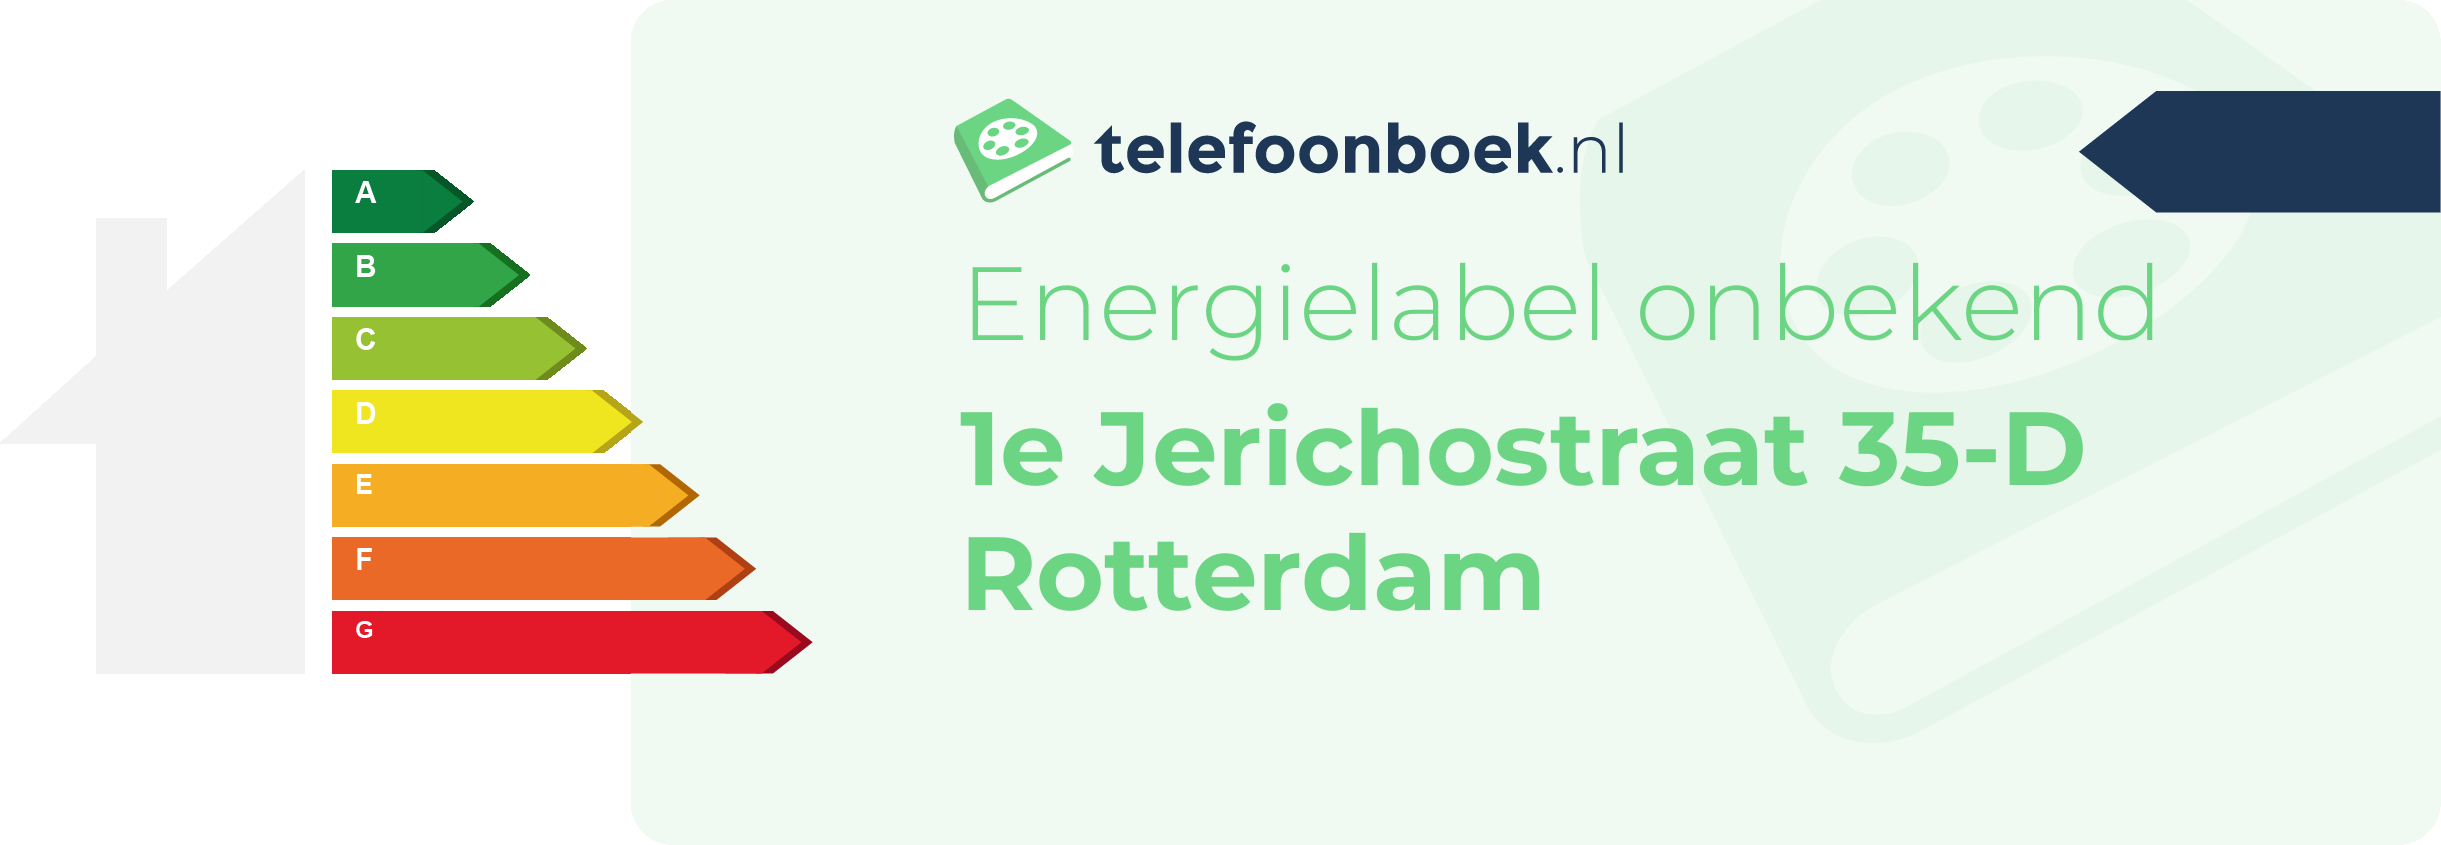 Energielabel 1e Jerichostraat 35-D Rotterdam